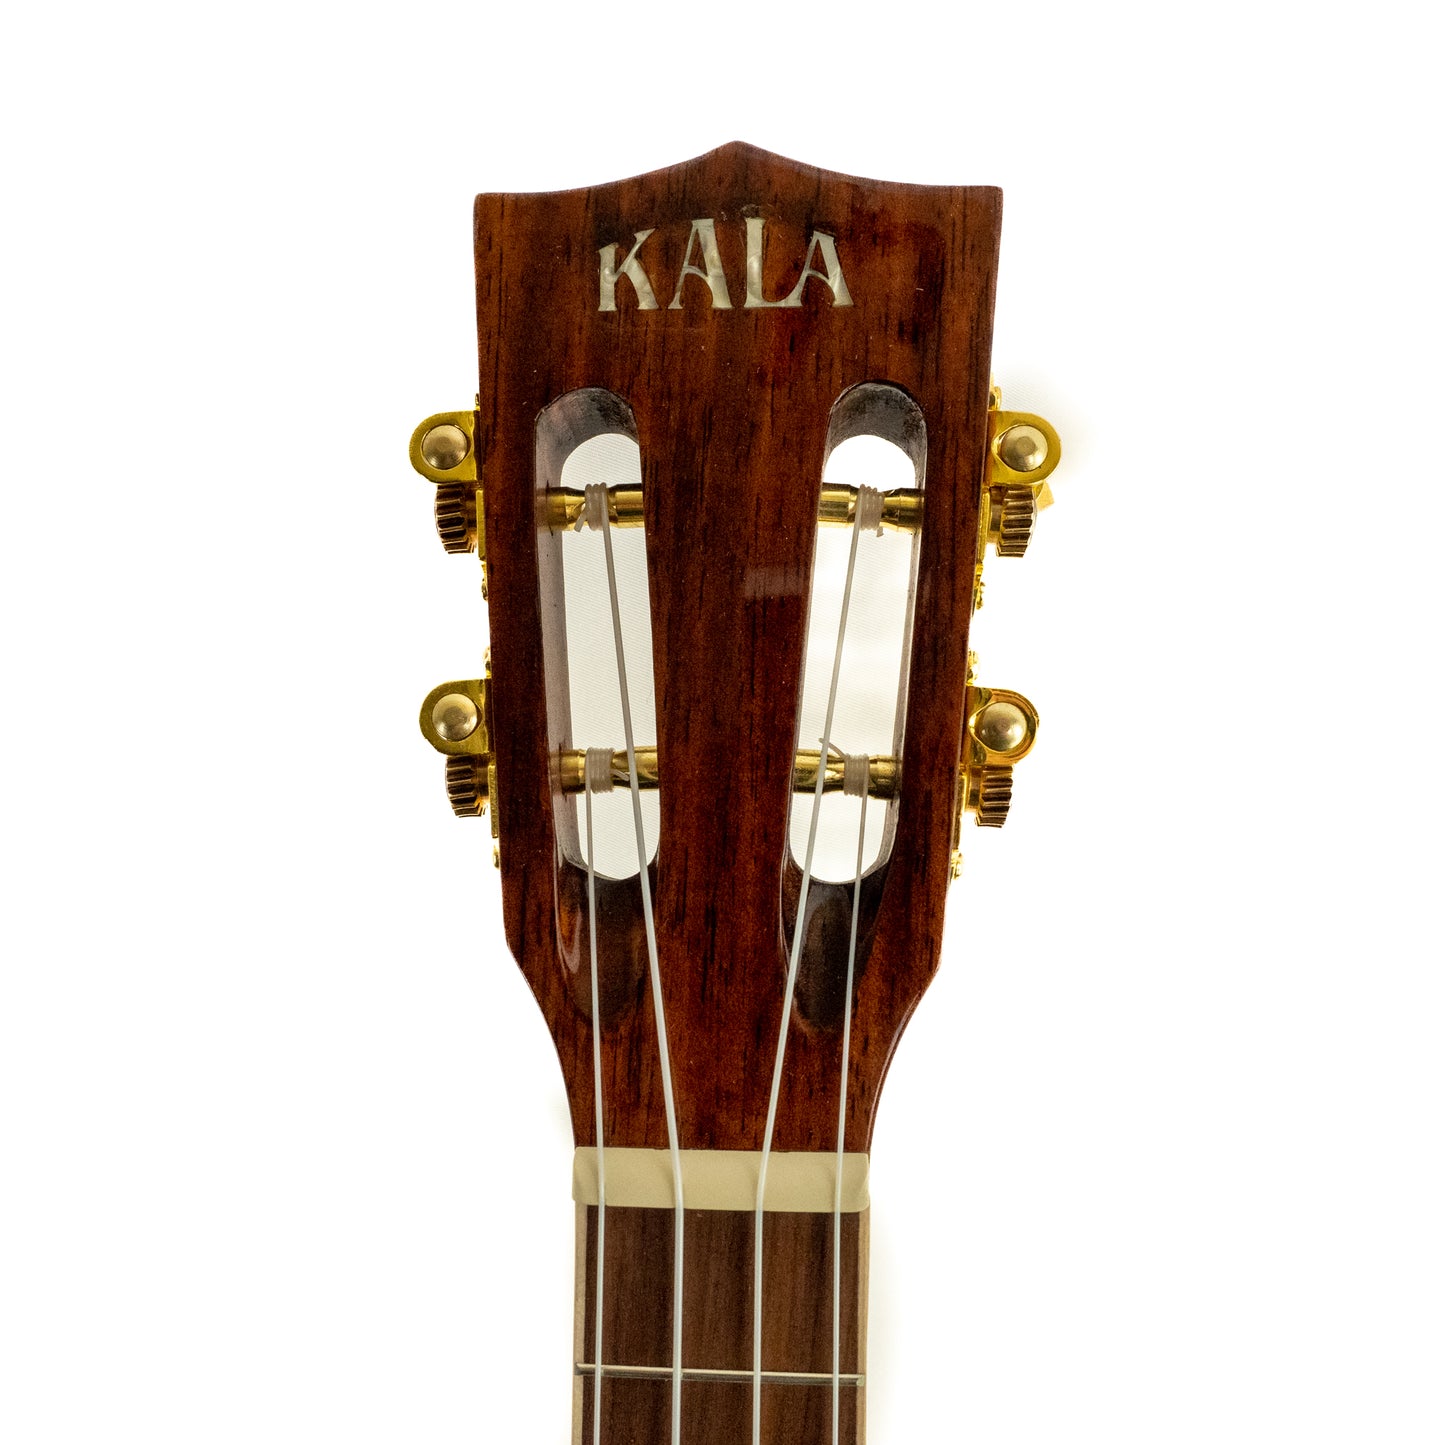 Kala KA-KCG gloss Koa Concert Ukulele with UPK2000 accessory bundle over $400 retail value!